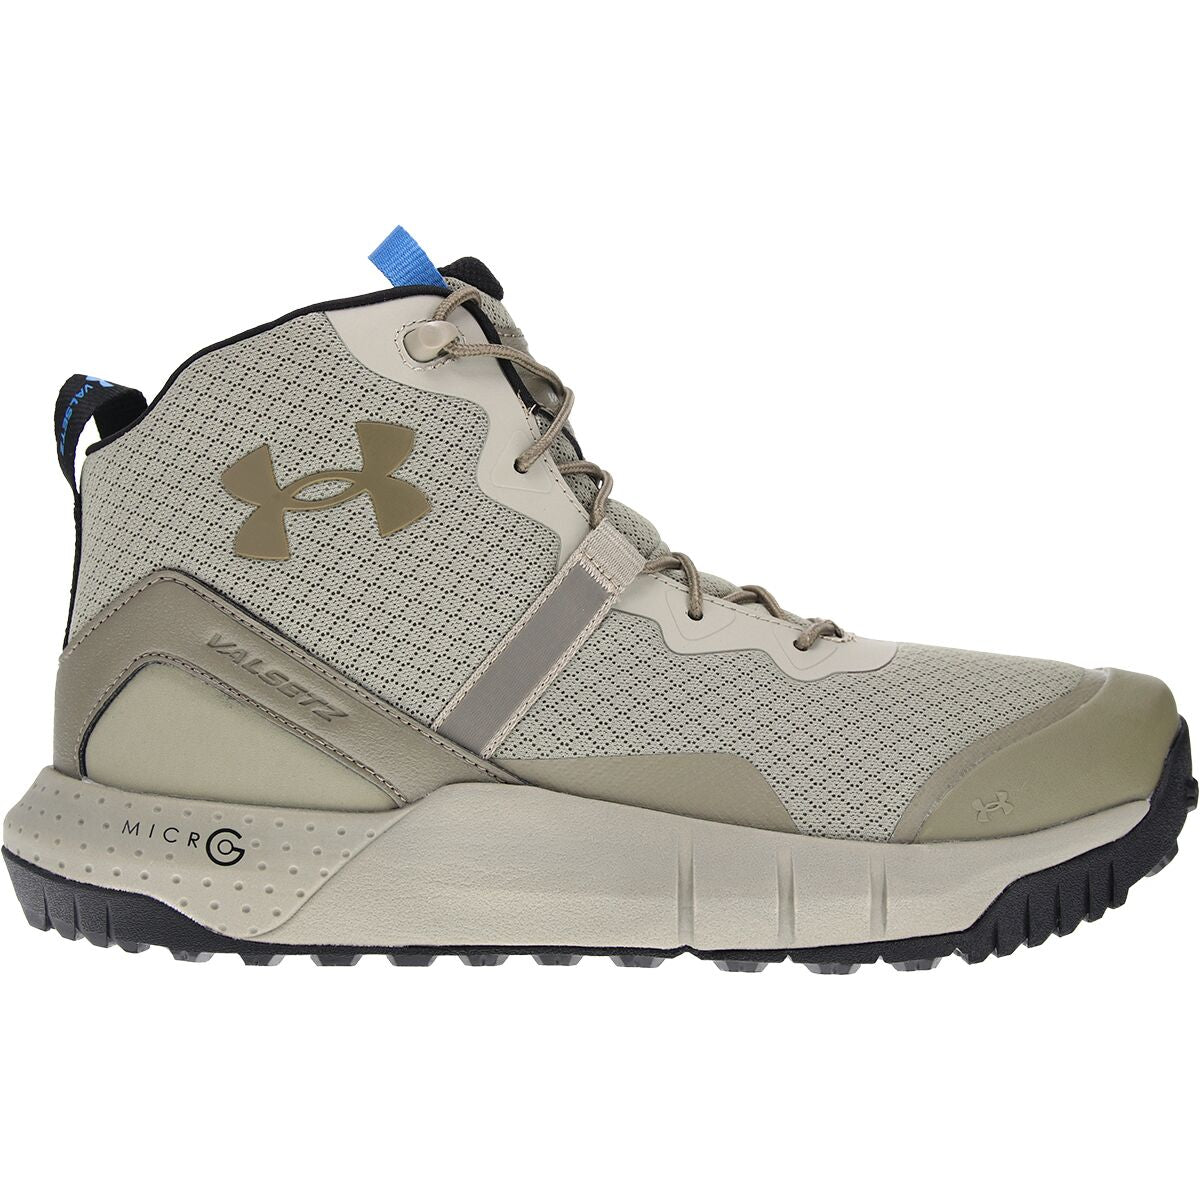 UA Men's Micro G Valsetz Mid Tactical Boots Tactical Boots Under Armour Khaki Grey 8 